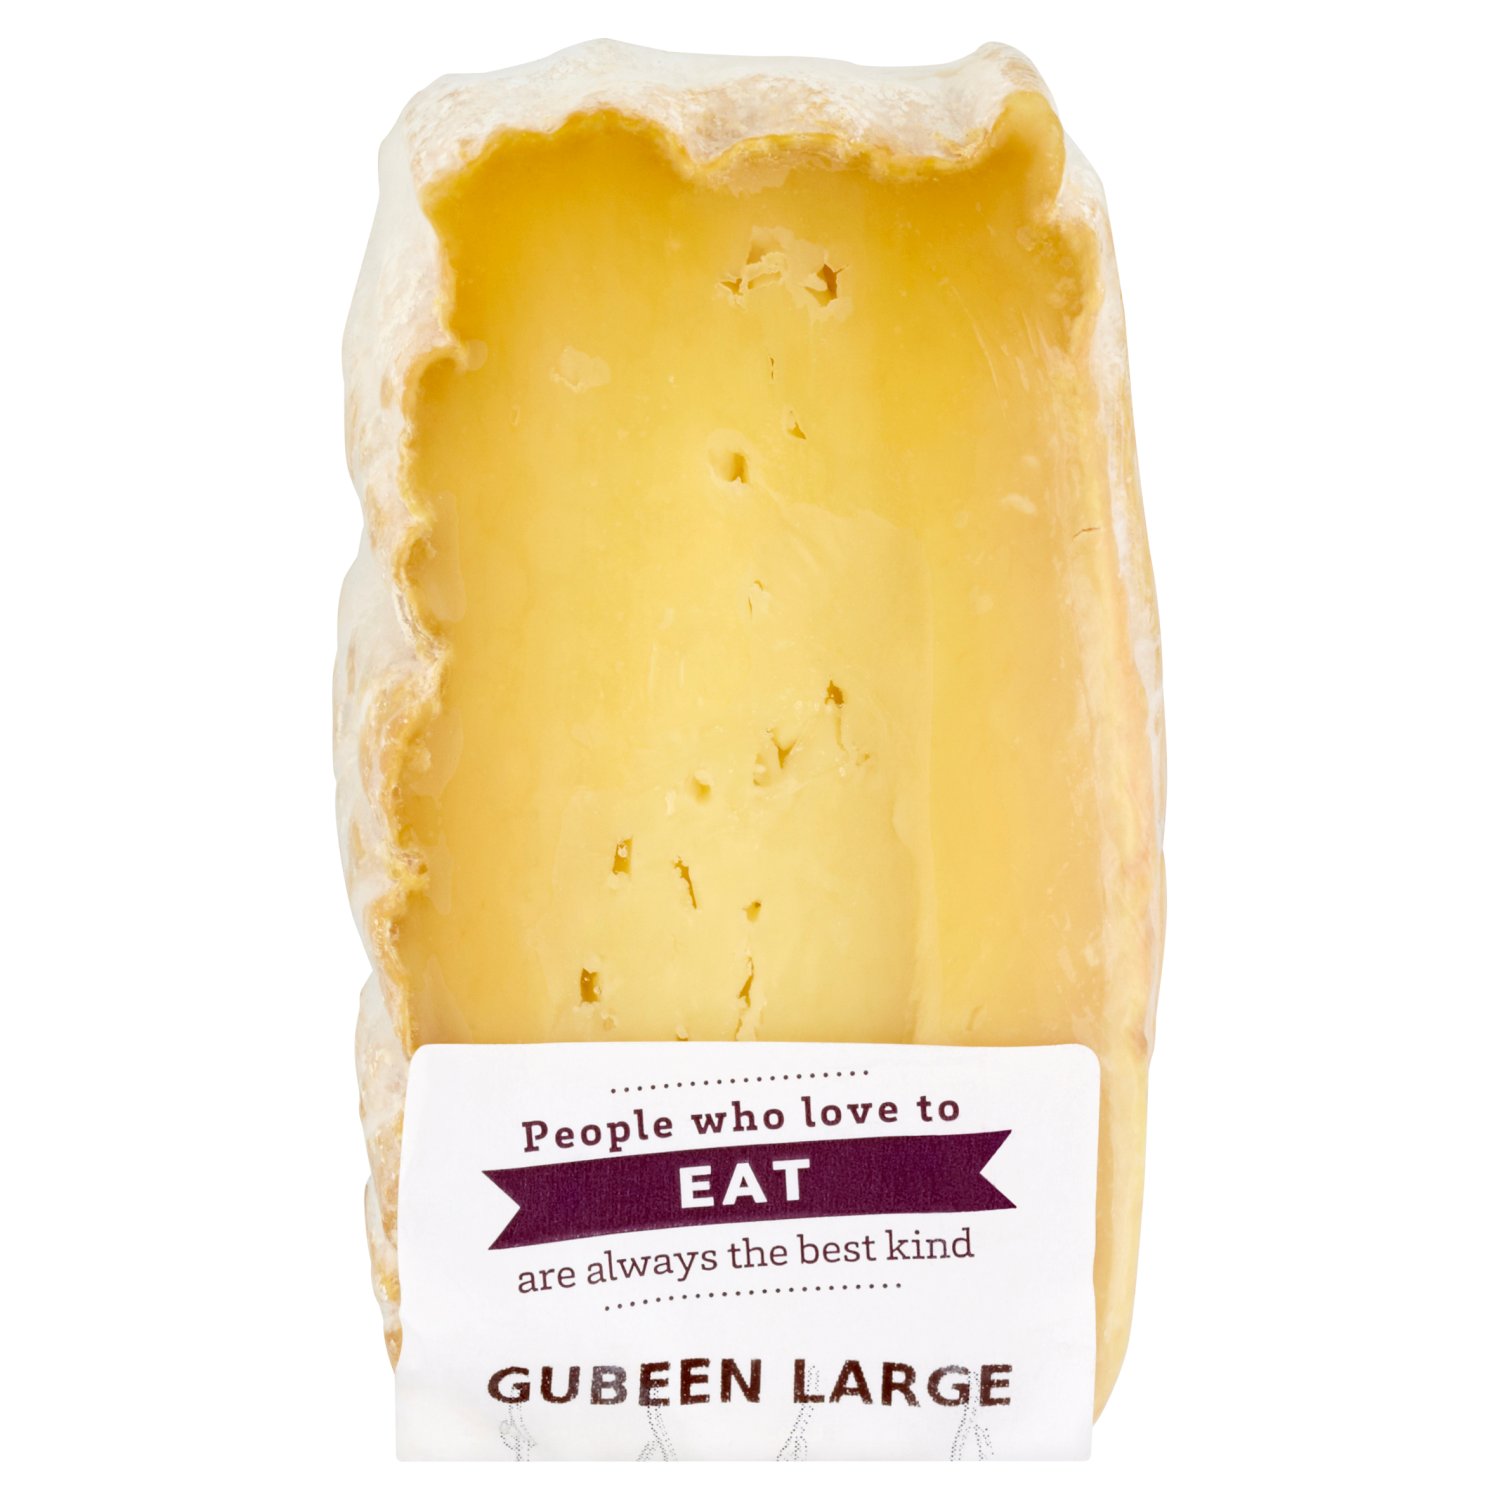 Gubben Large Cheese (1 kg)